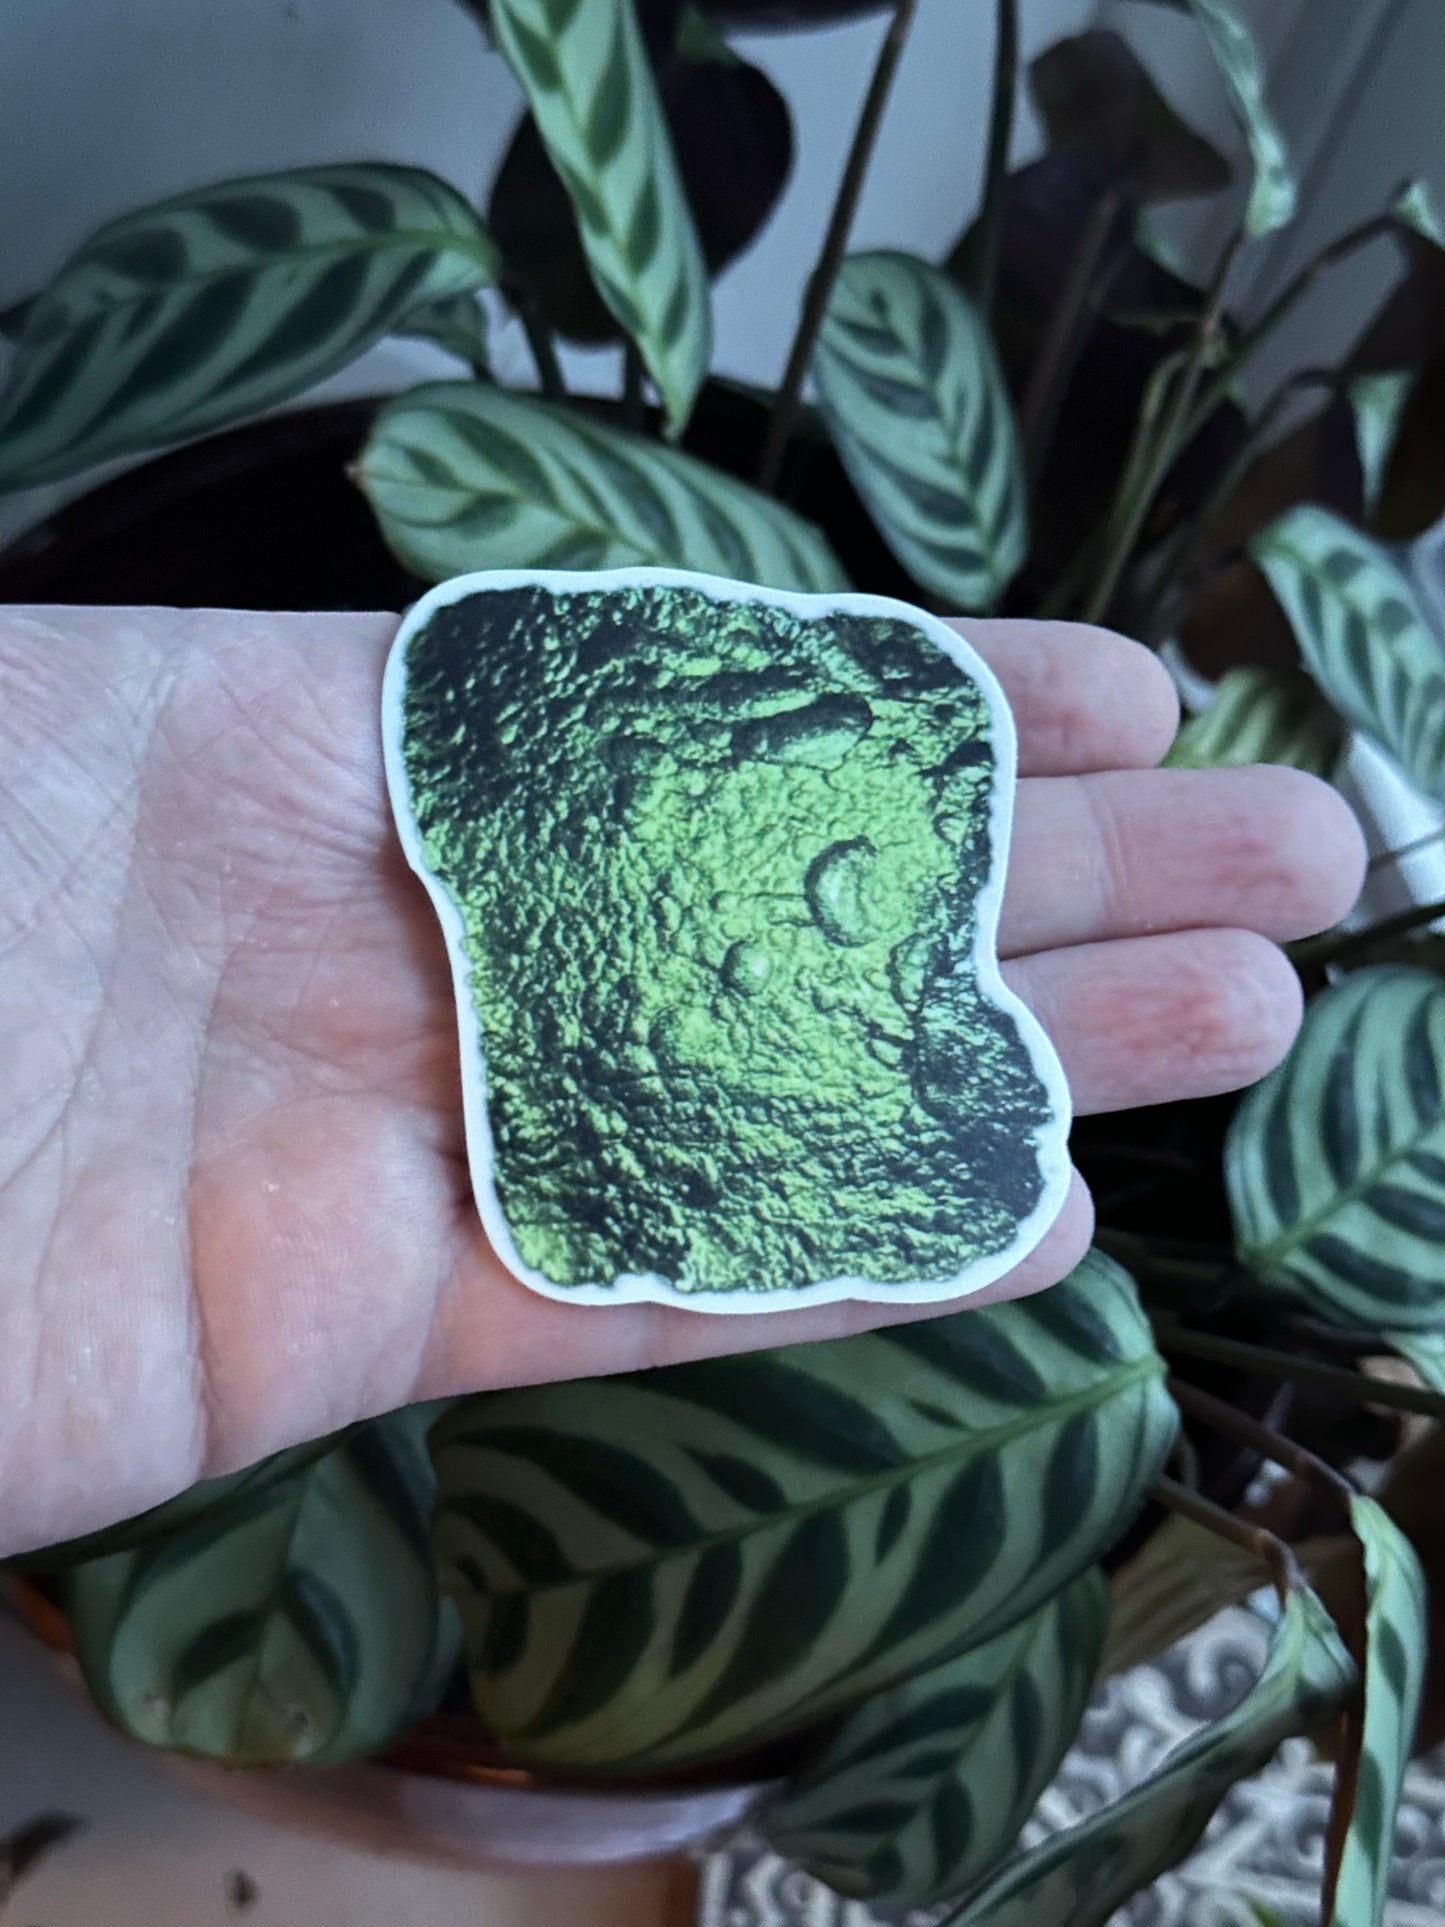 5-Pack of 3” Waterproof Vinyl Moldavite Decal Stickers